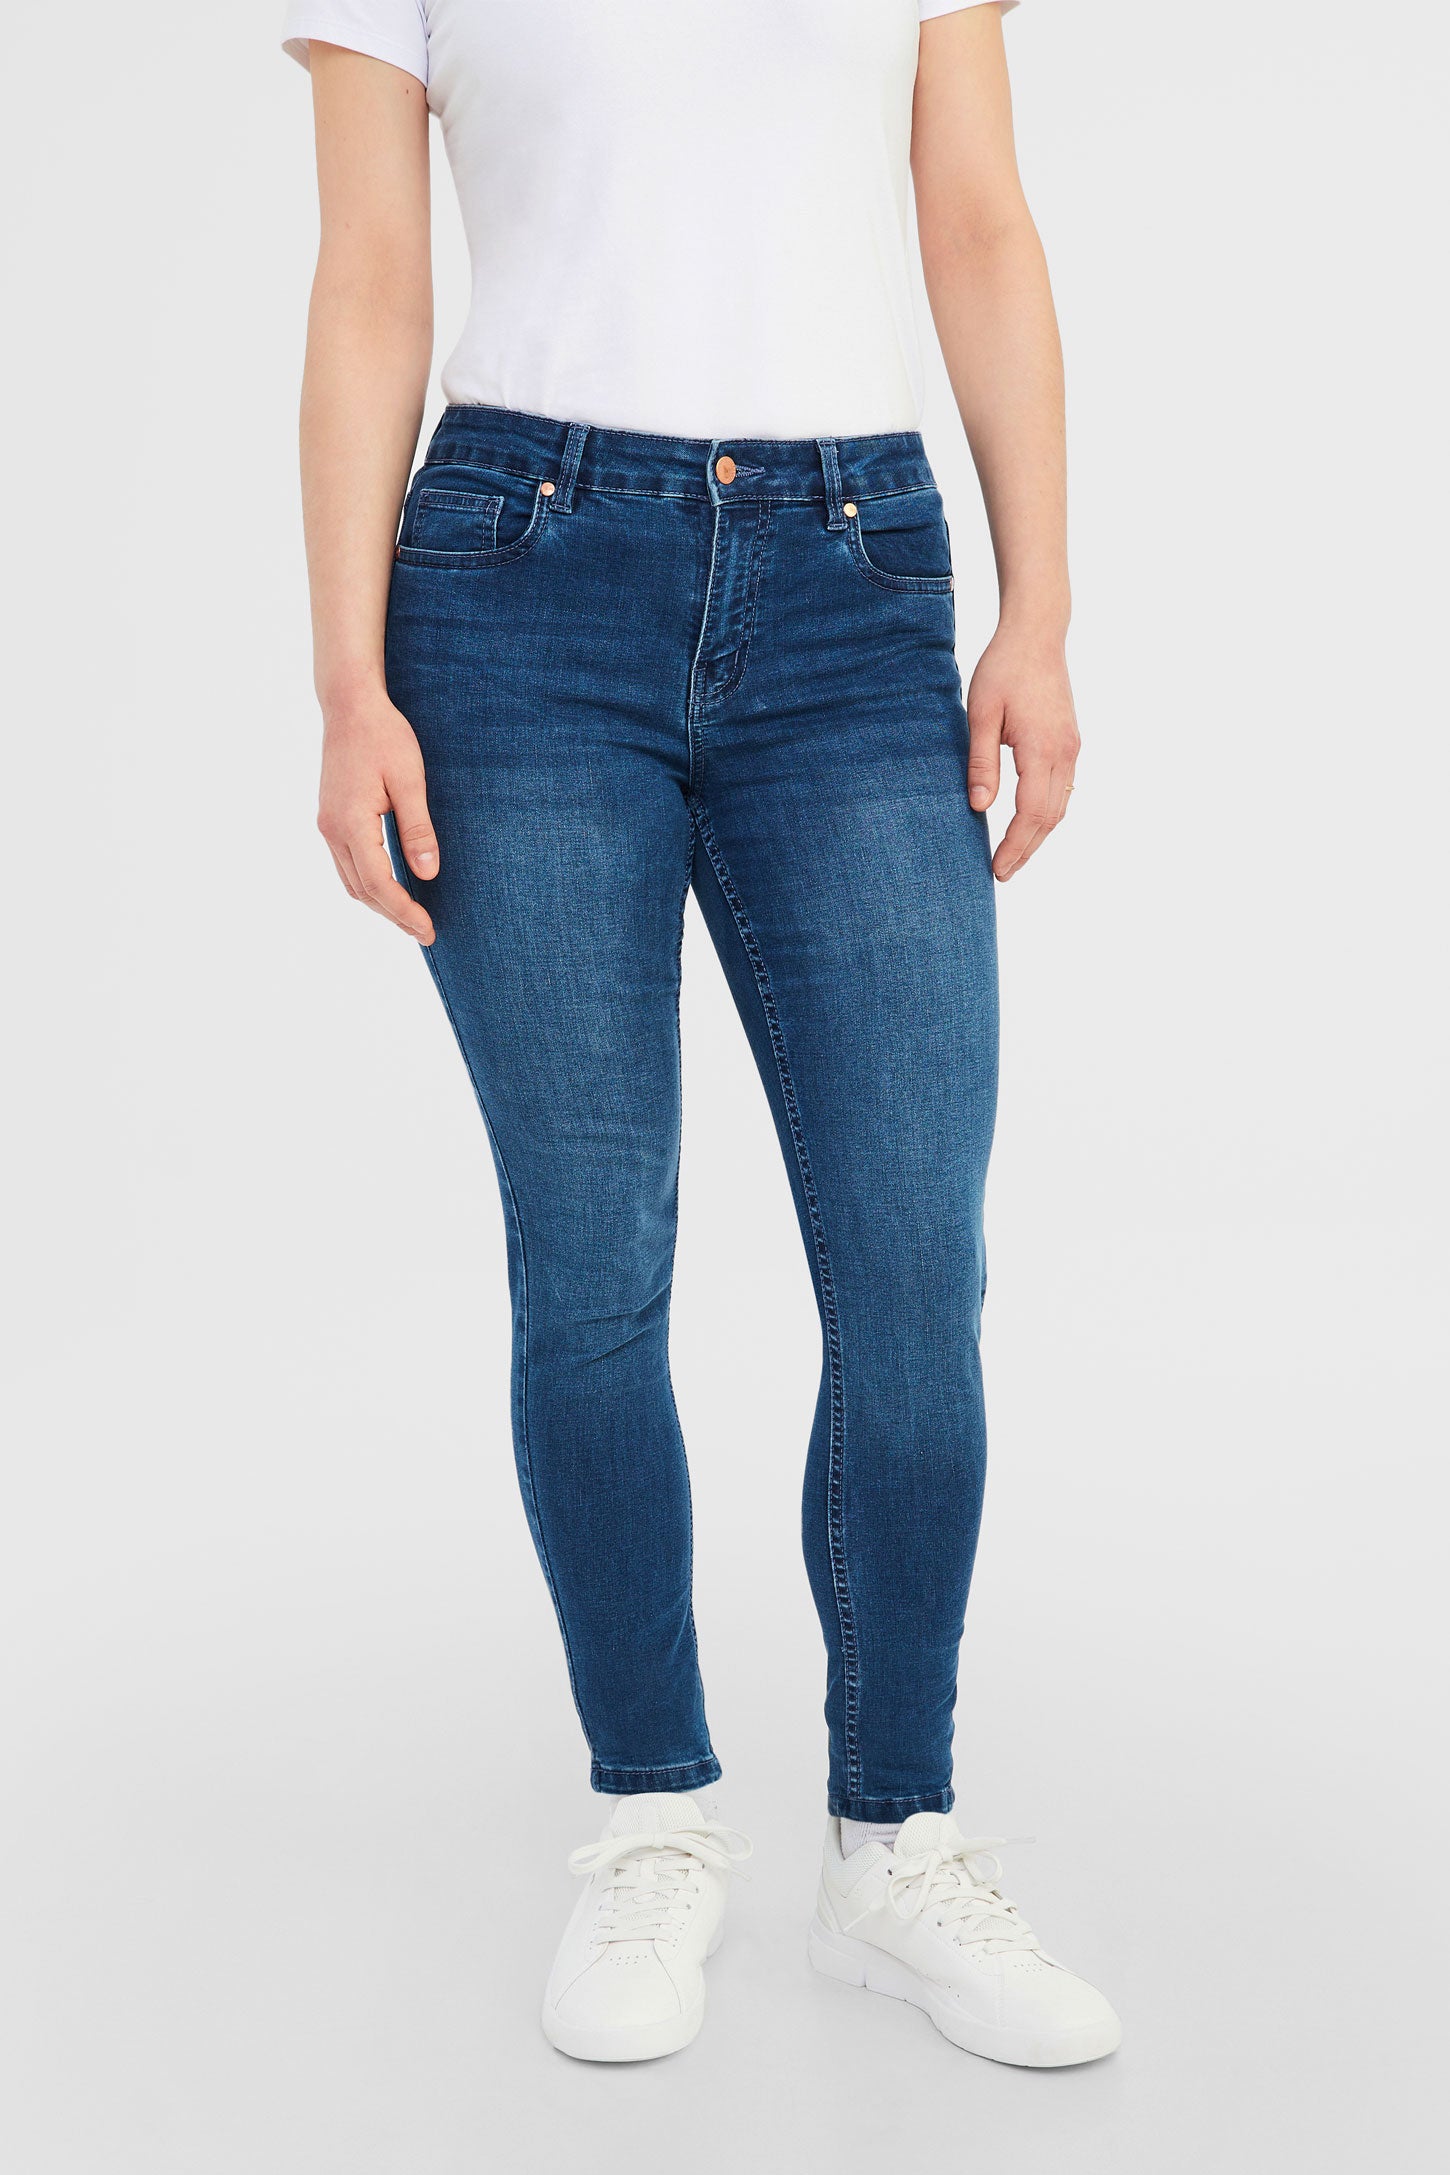 Jeans coupe ajustée - Femme && BLEU MOYEN